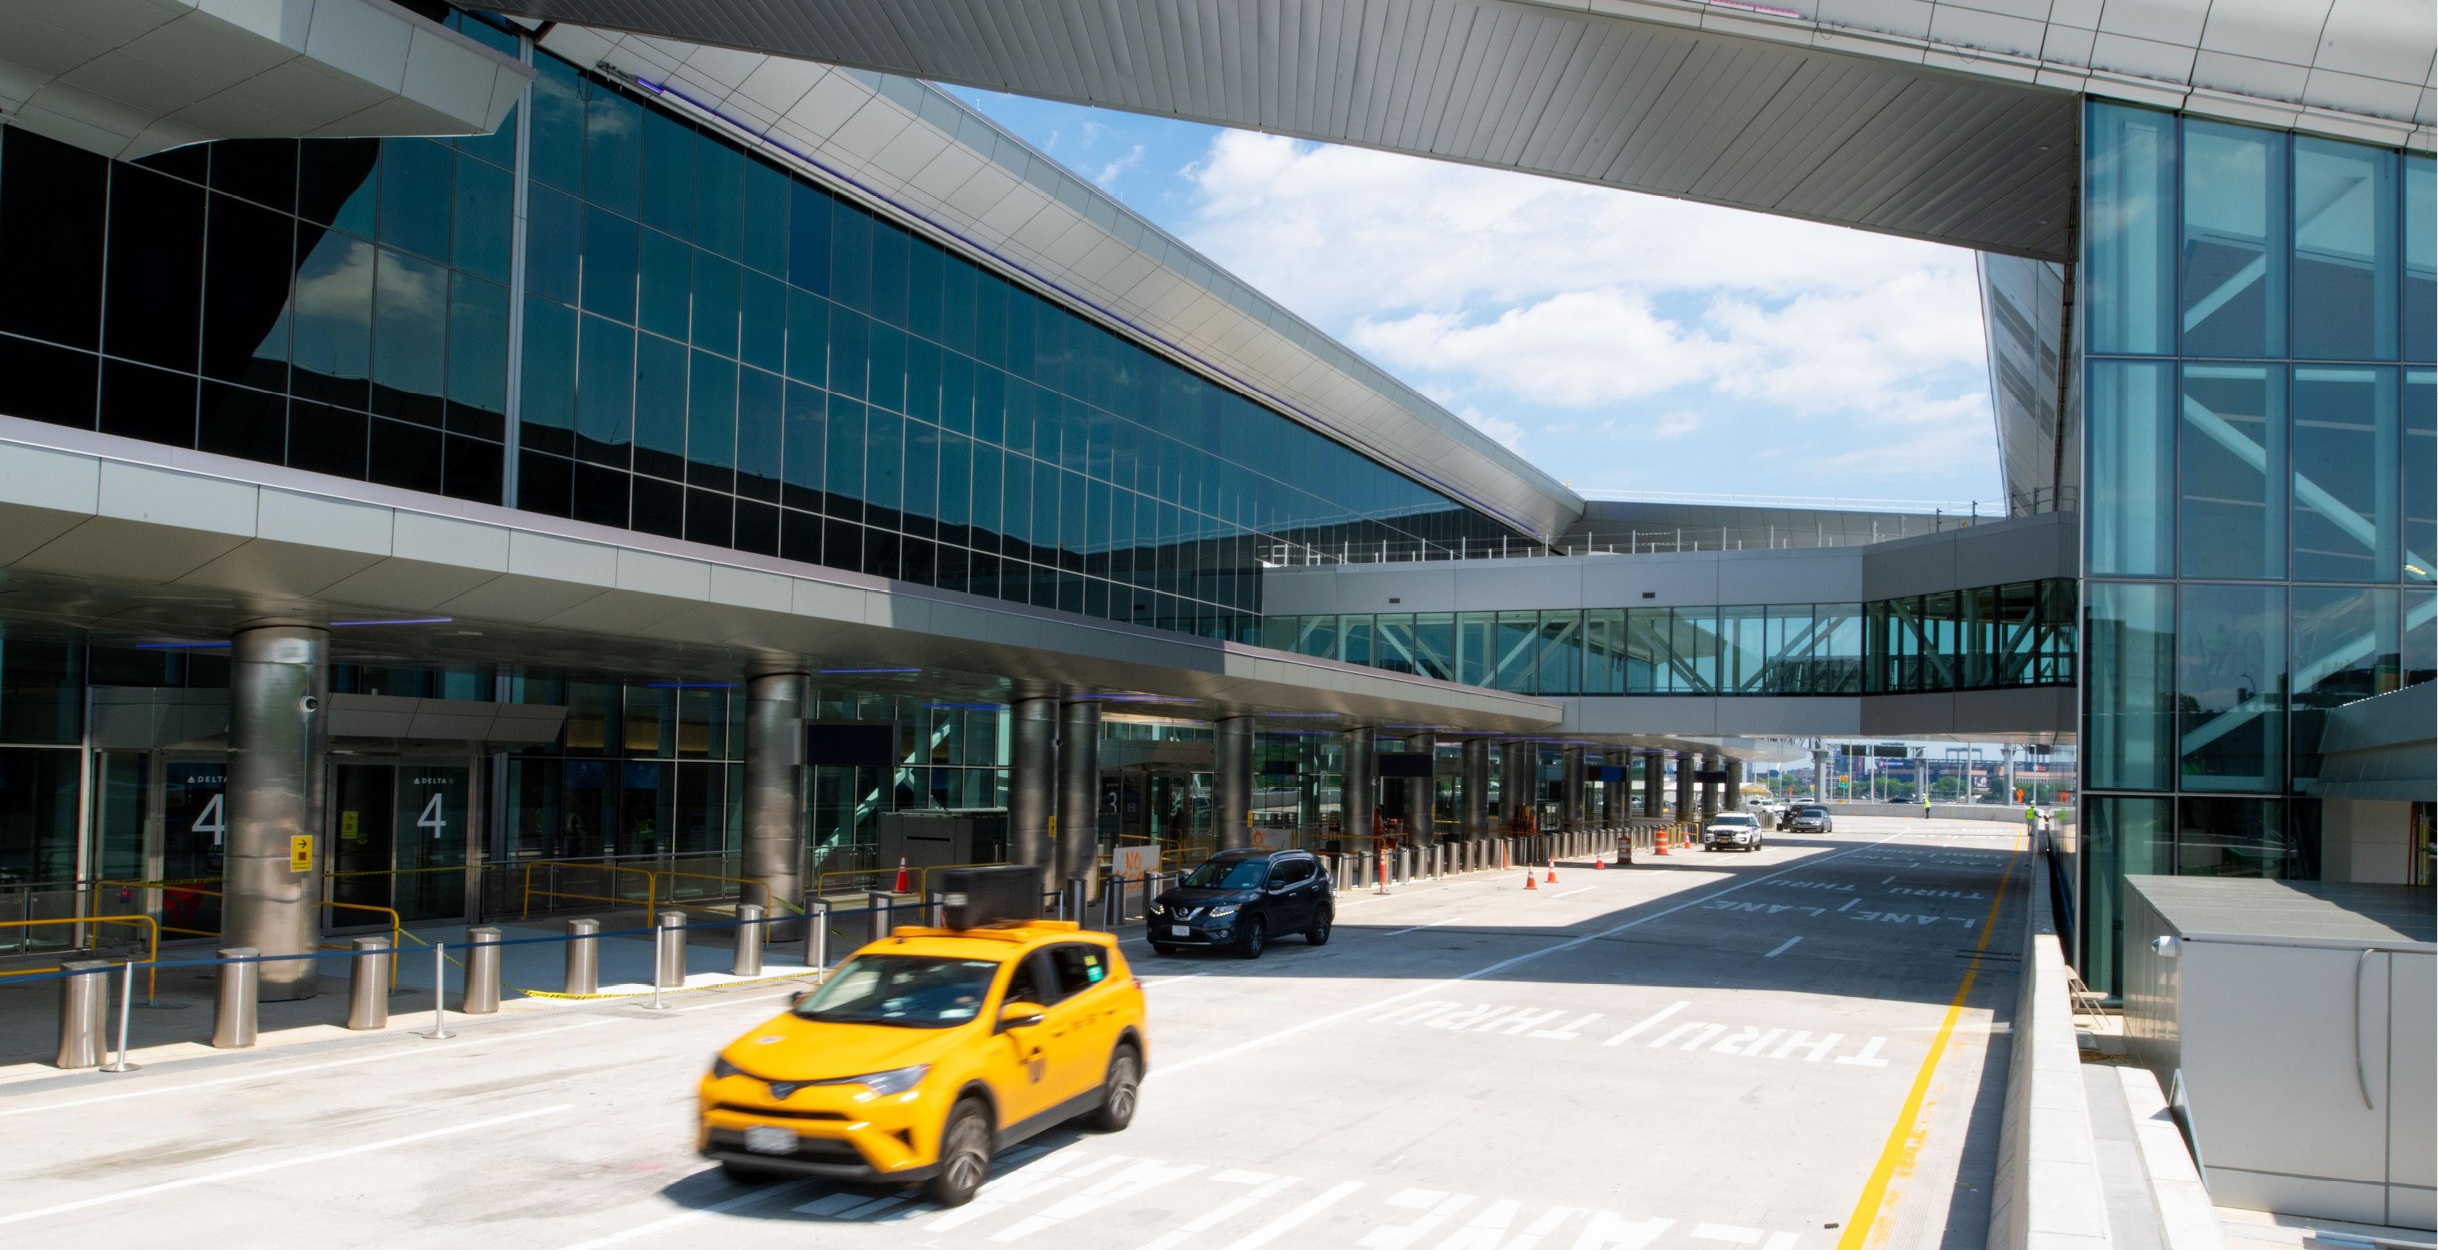 Delta Air Lines Terminal C at LaGuardia Airport